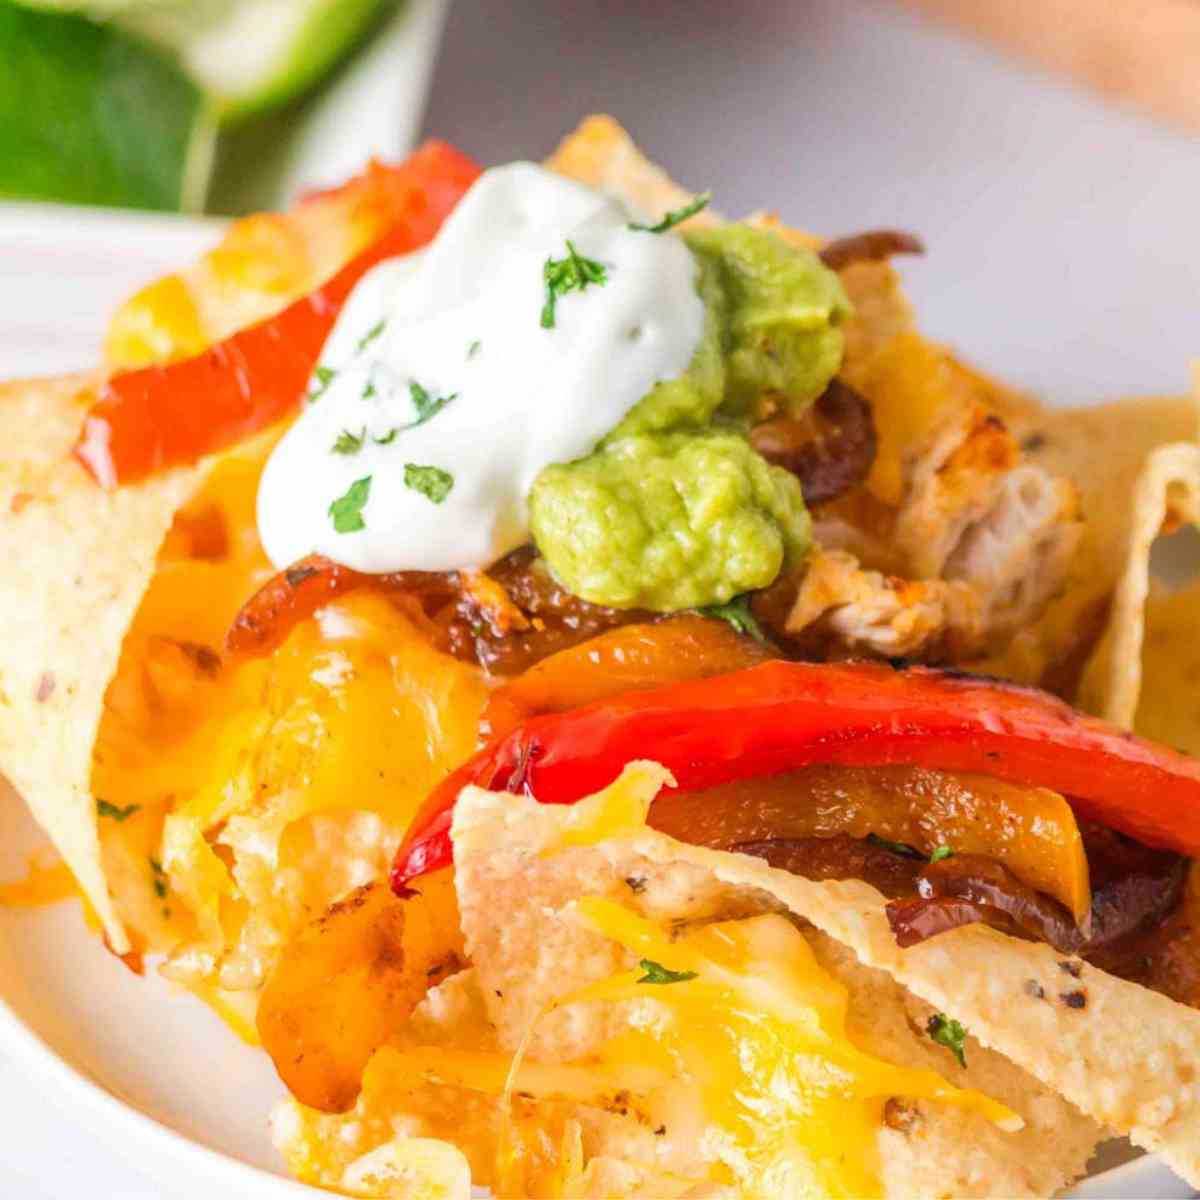 Featured image of fajita chicken nachos on a plate.